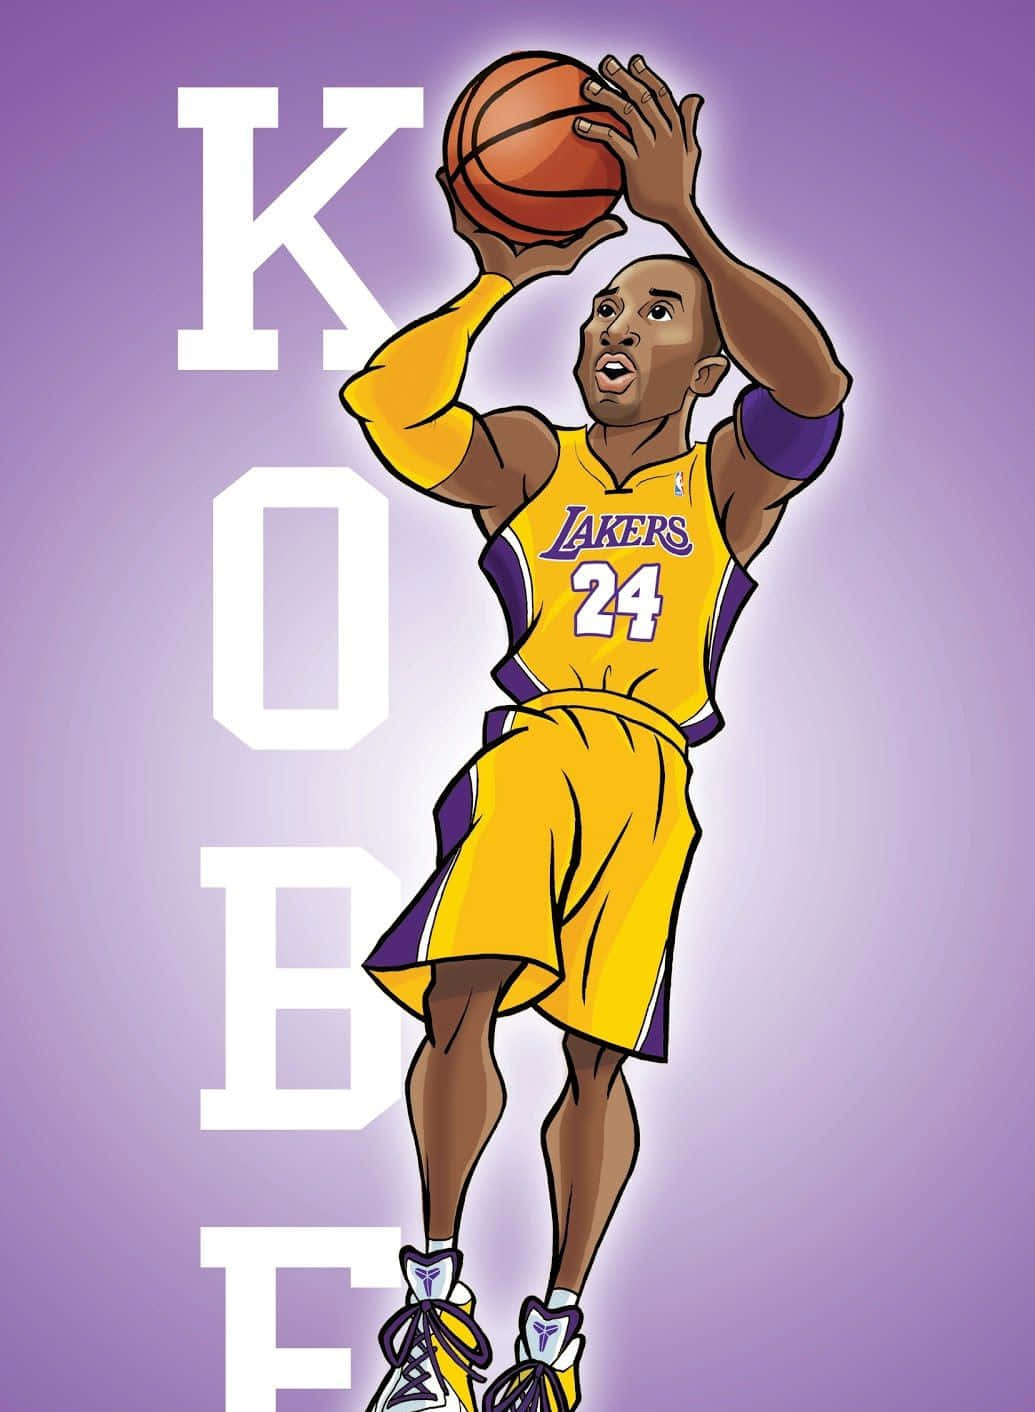 Legendary Los Angeles Lakers player Kobe Bryant.